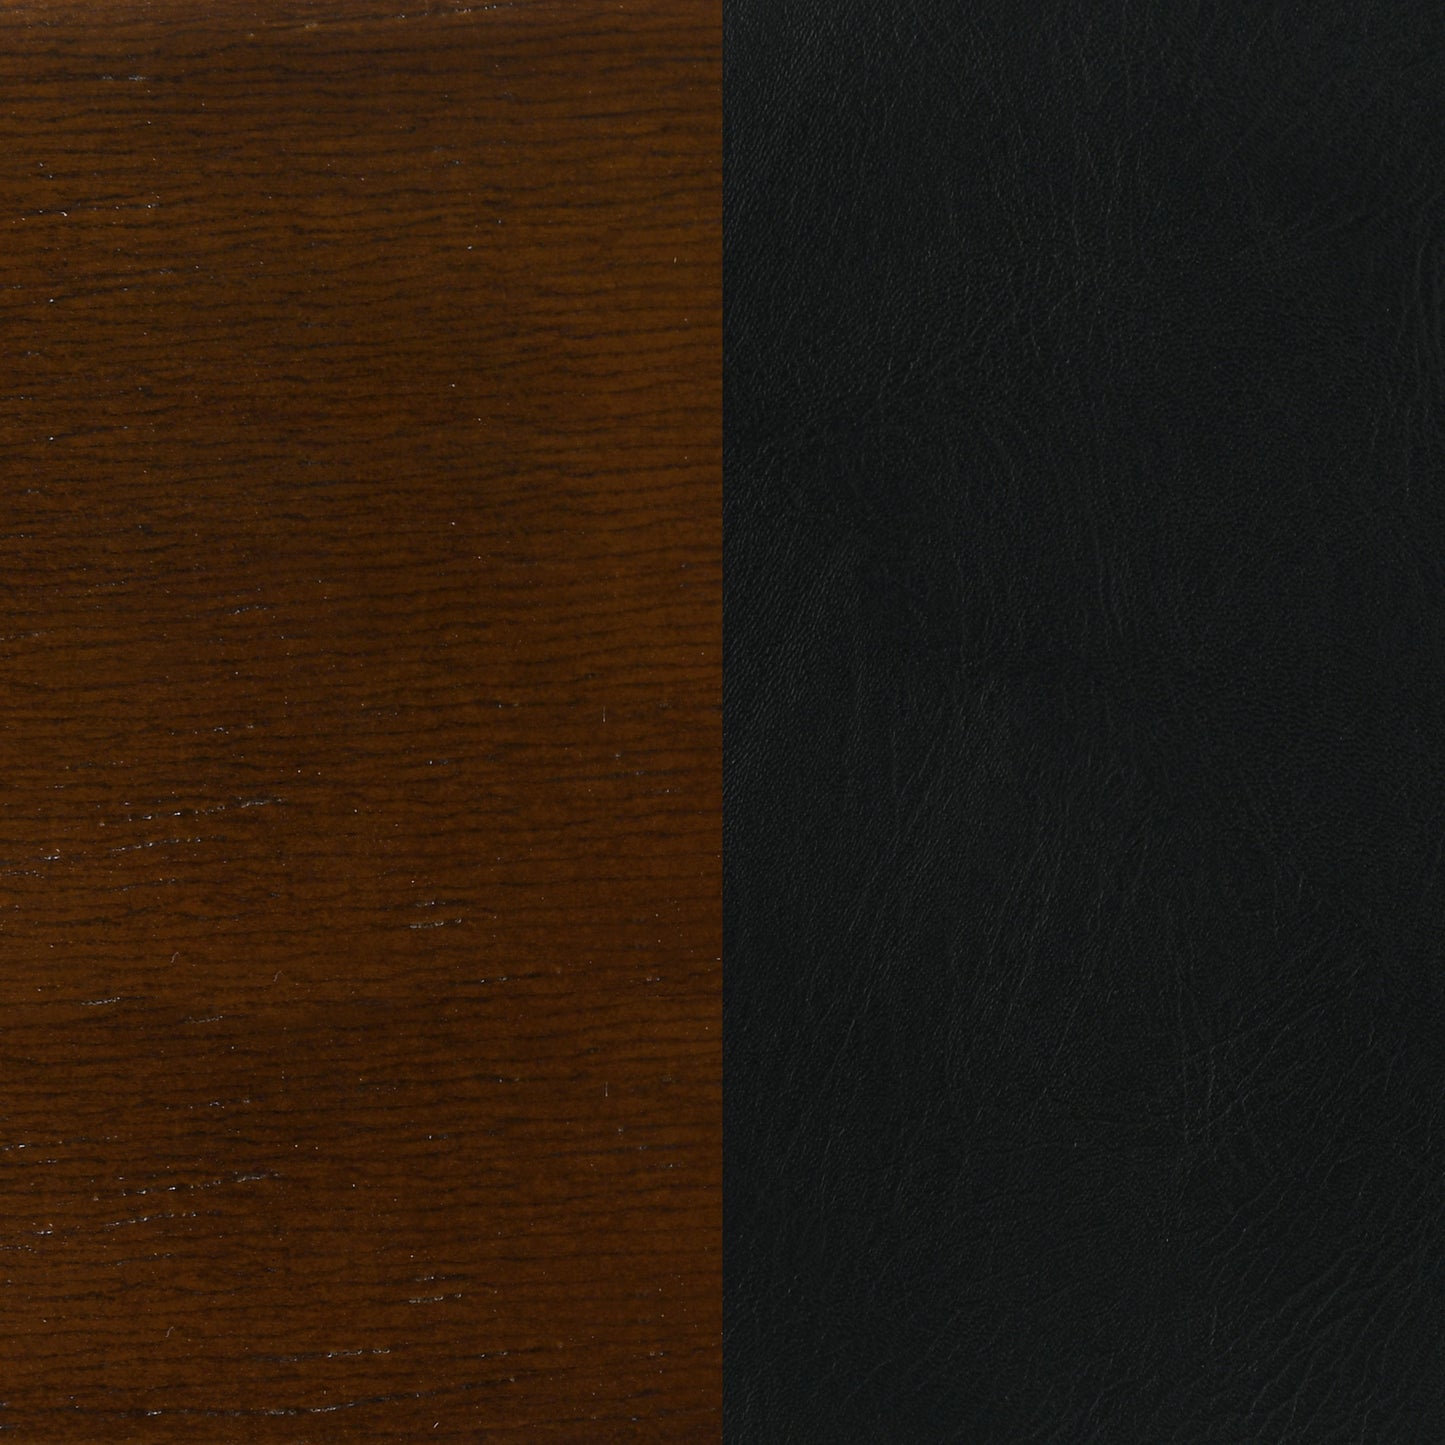 Broxton Upholstered Swivel Bar Stools Chestnut and Black (Set of 2)